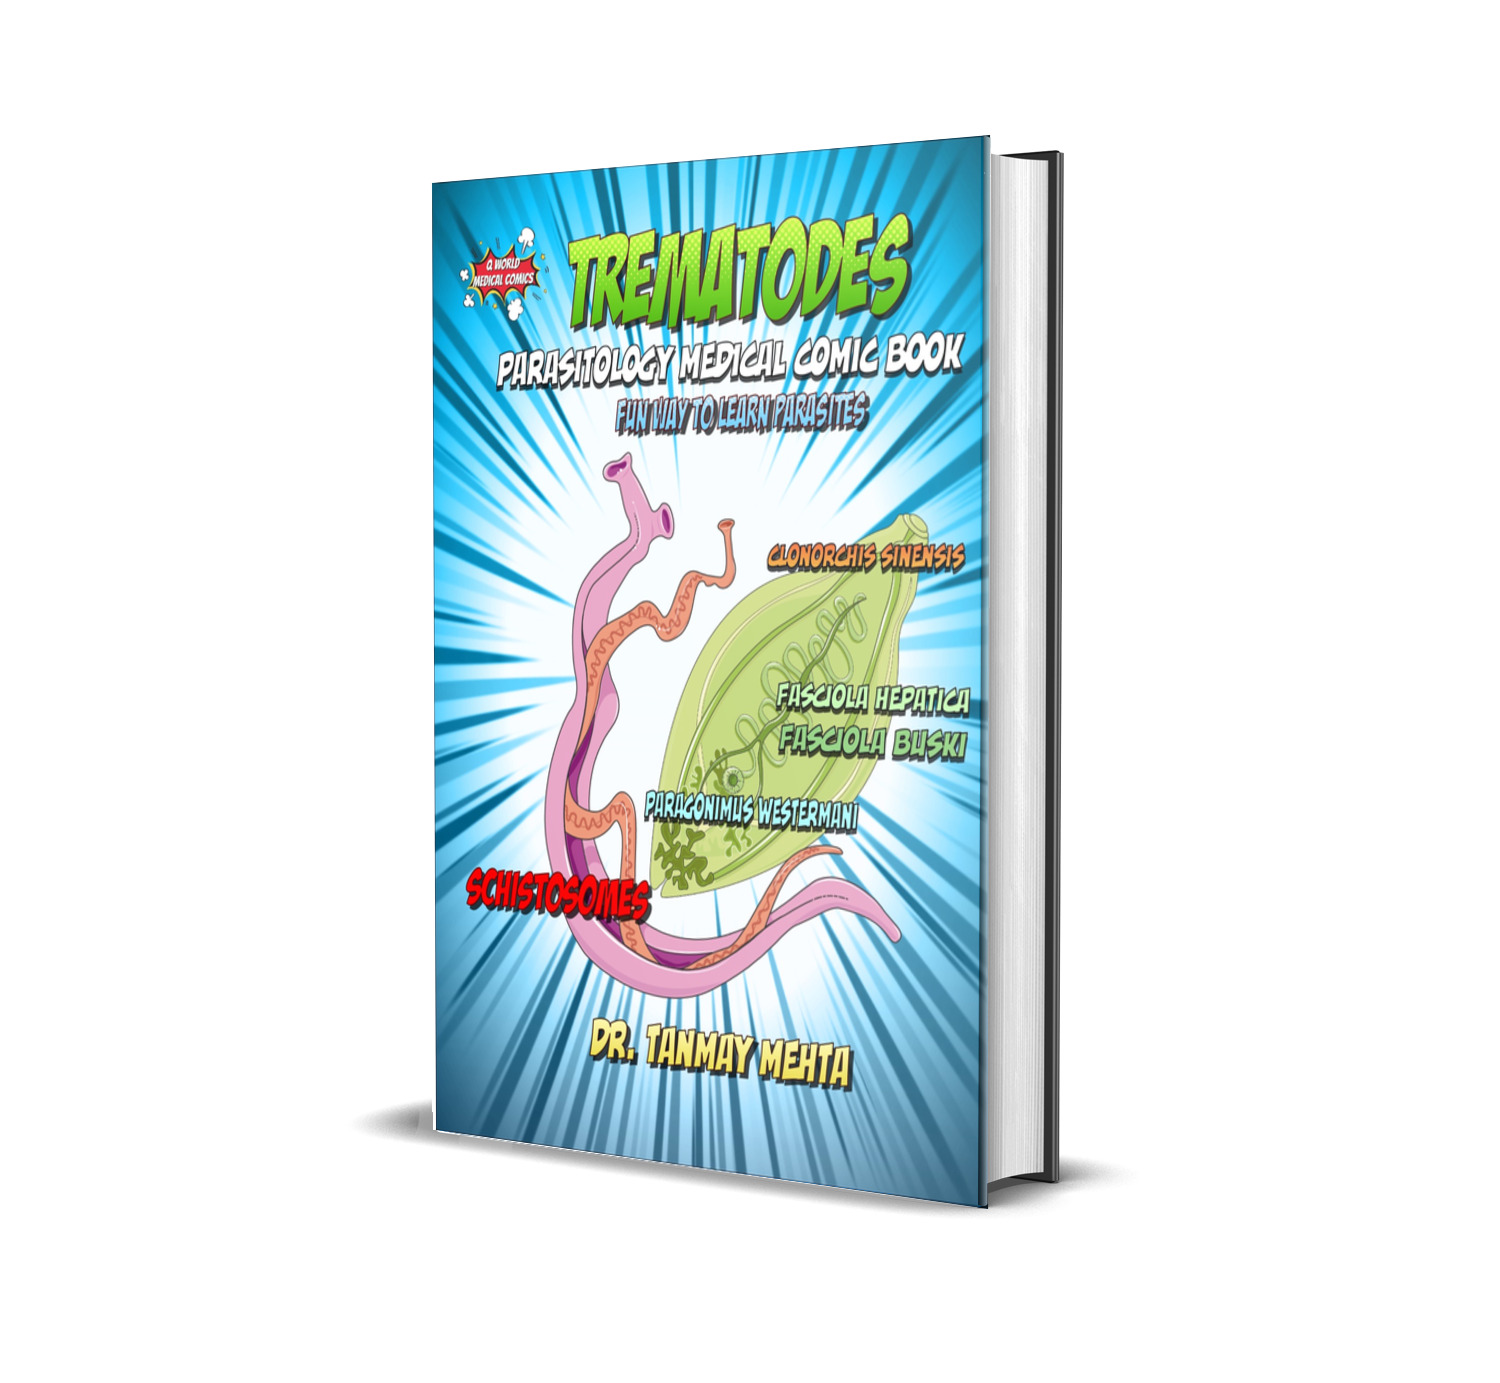 Trematodes: parasitology medical comic book